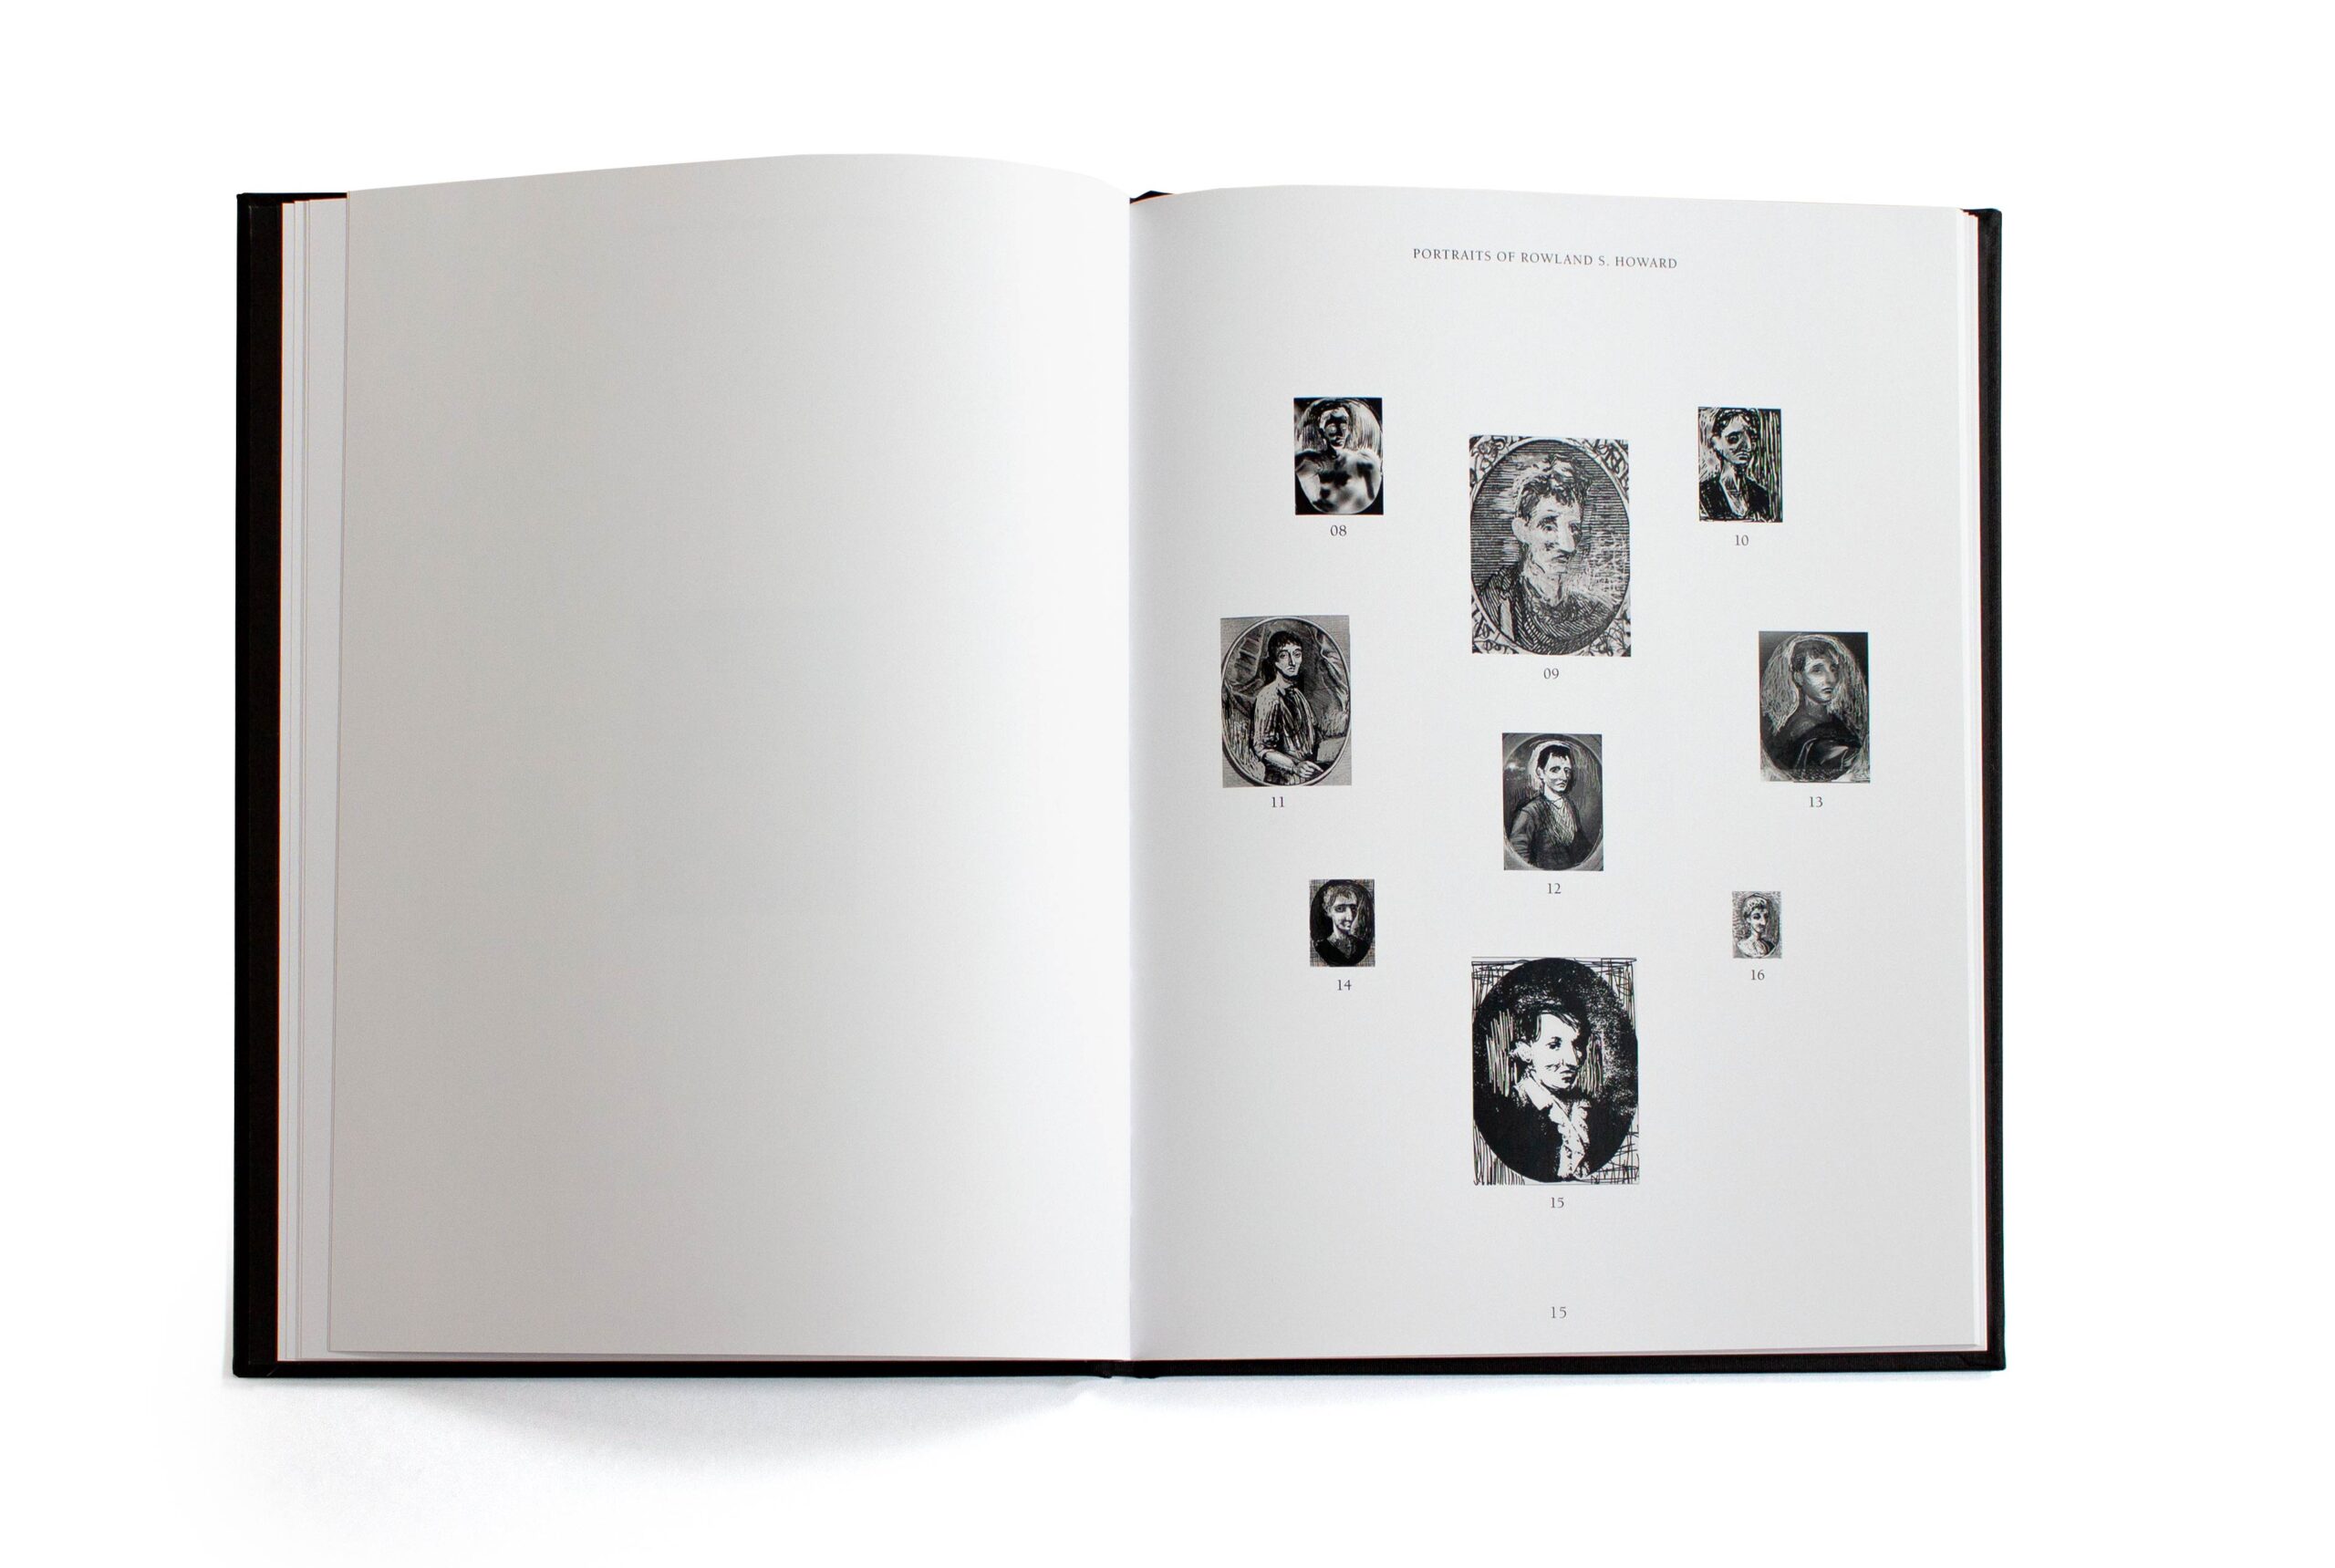 Ephemerality is all Very Well: Portraits of Rowland S. Howard, Lyndal Walker and Tony Clark